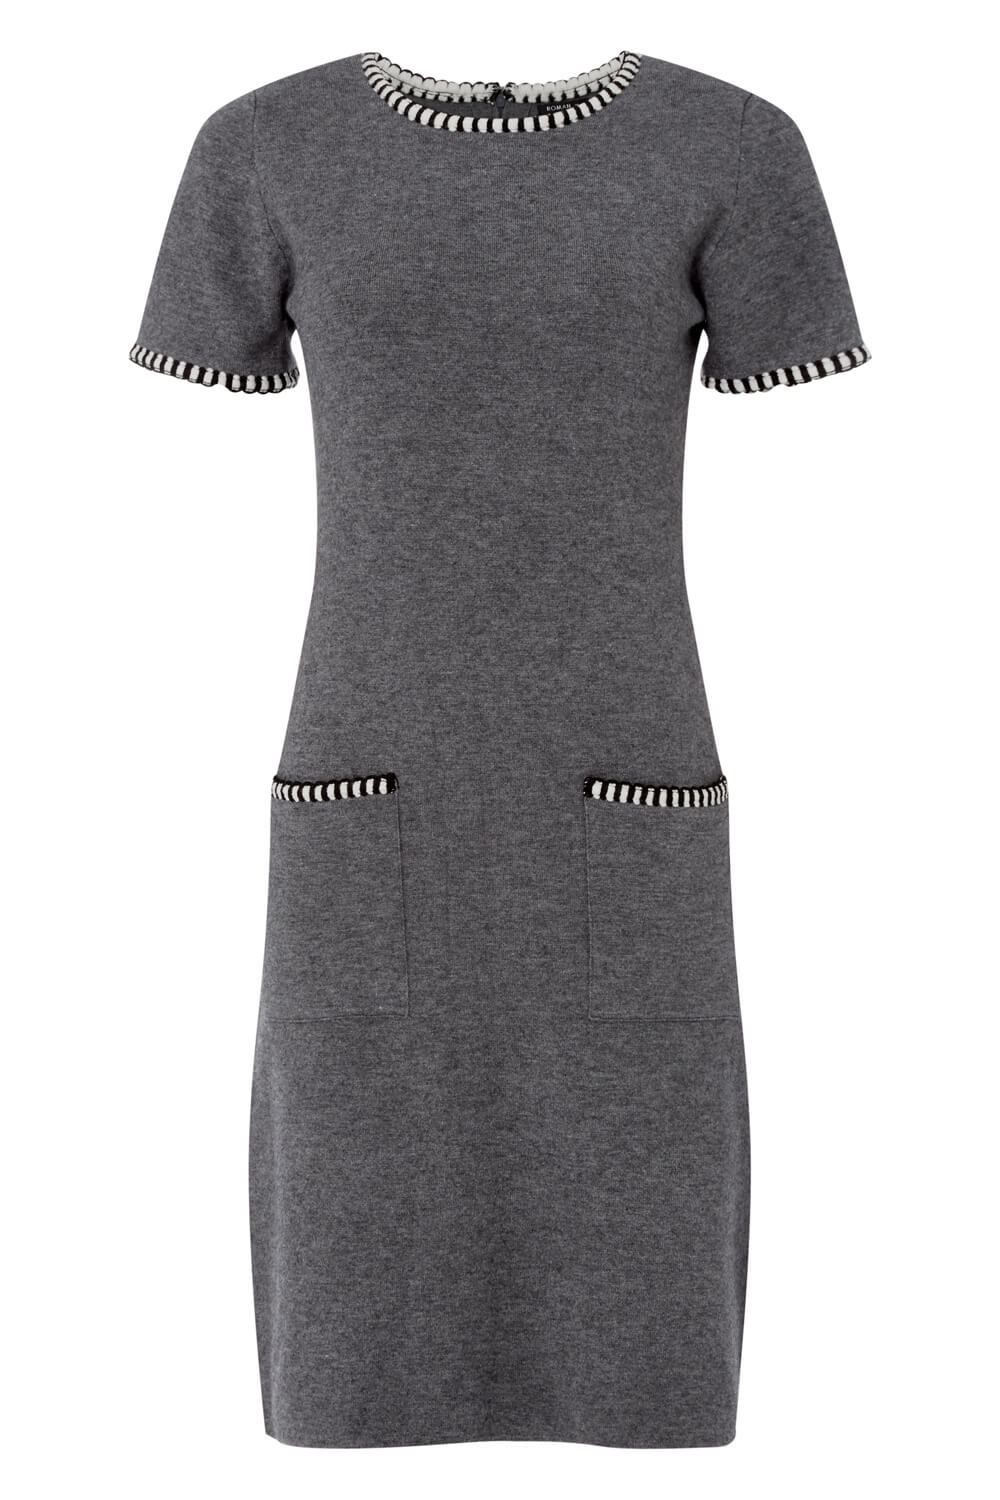 Grey Contrast Trim Knit Dress, Image 5 of 5